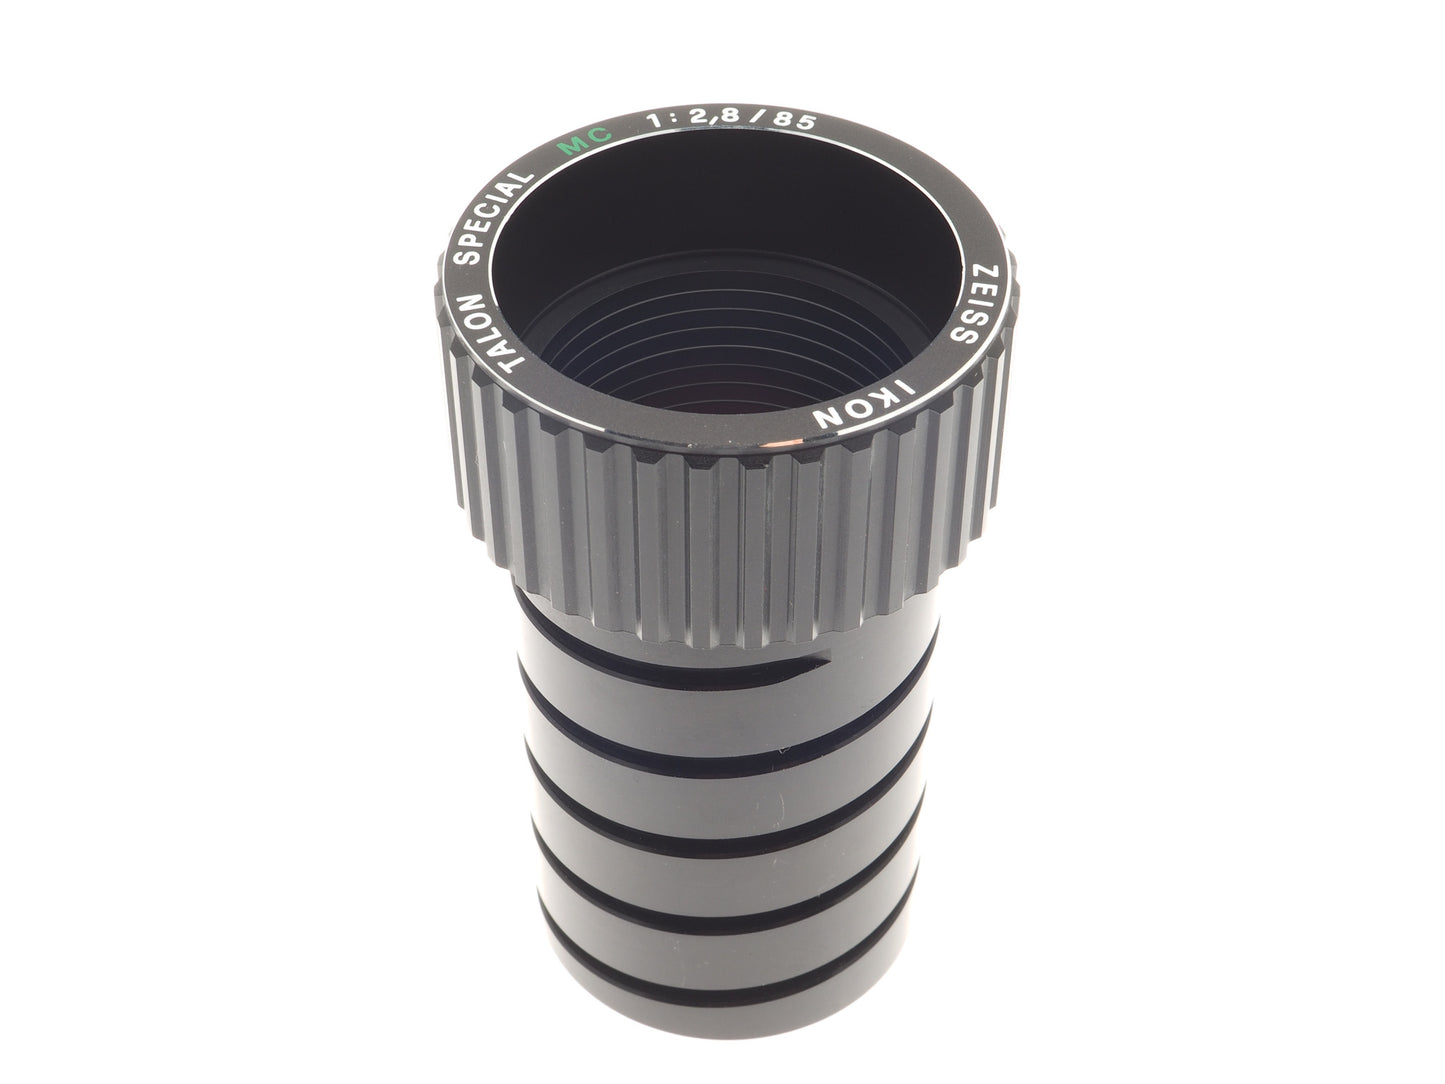 Zeiss Ikon 85mm f2.8 Talon Special MC - Lens